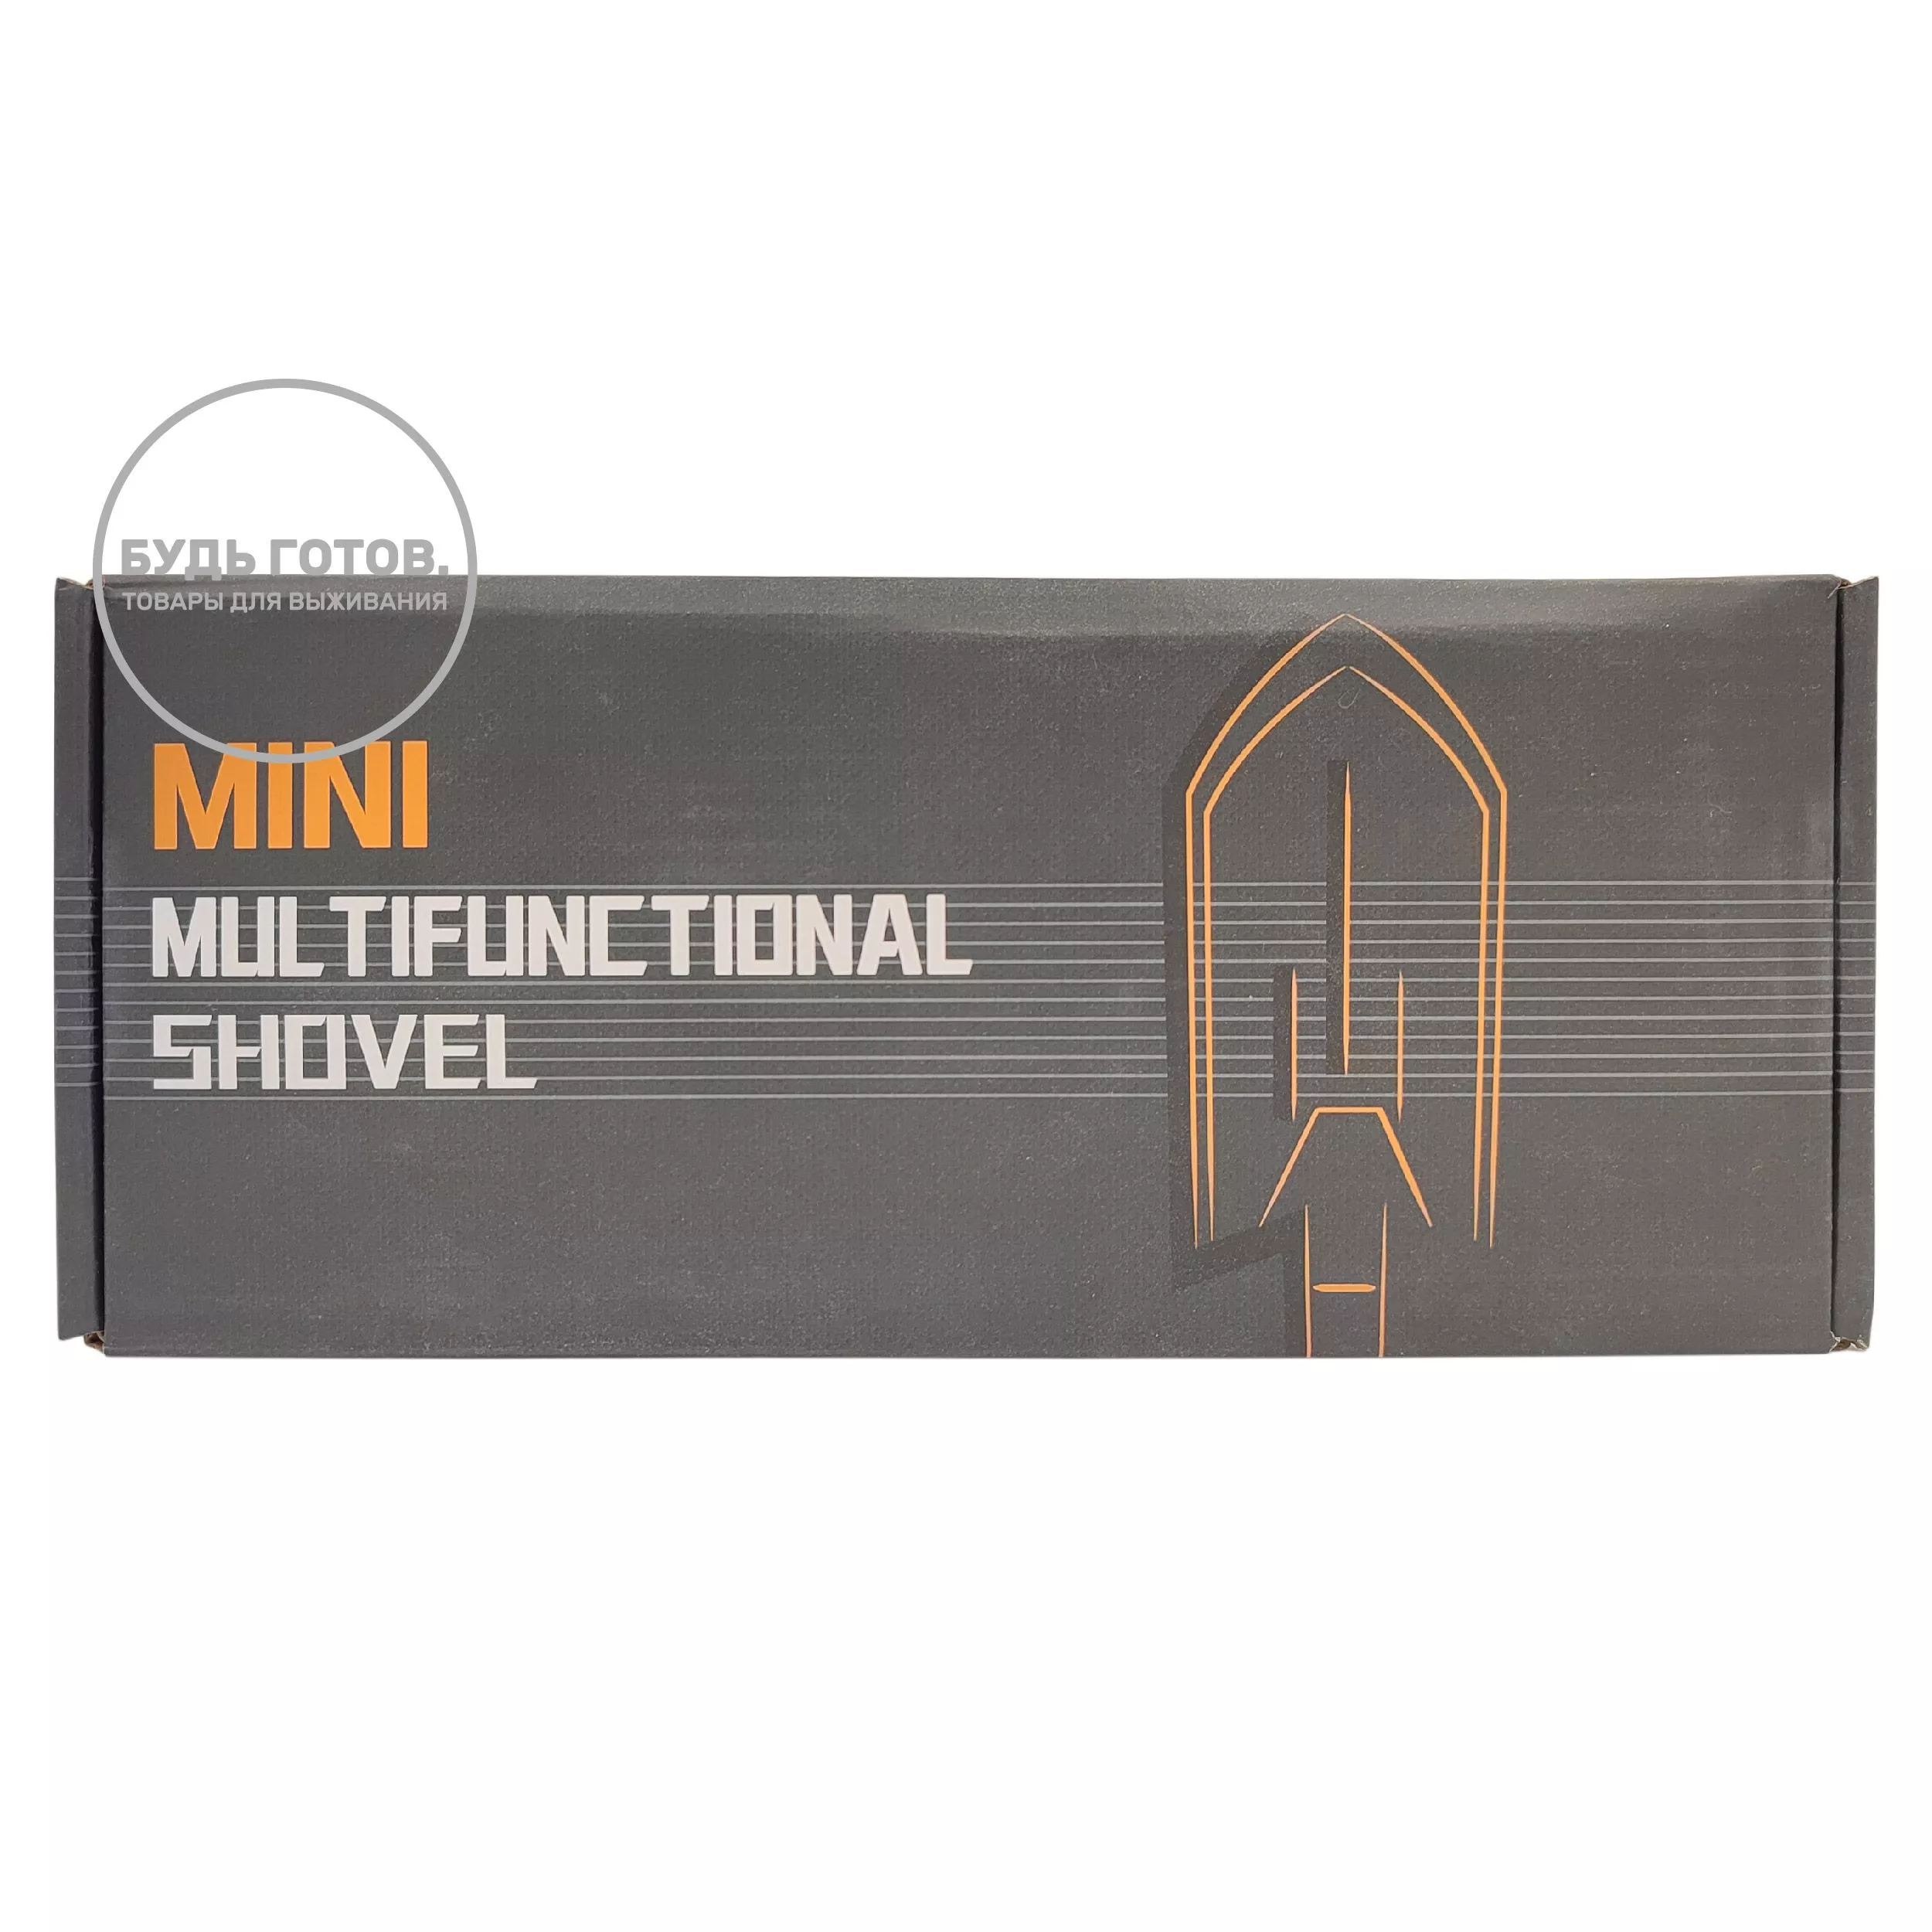 Мультифункциональная мини-лопата mini Multi-function Shovel с доставкой по России и в Казахстан | BreadyФото 1